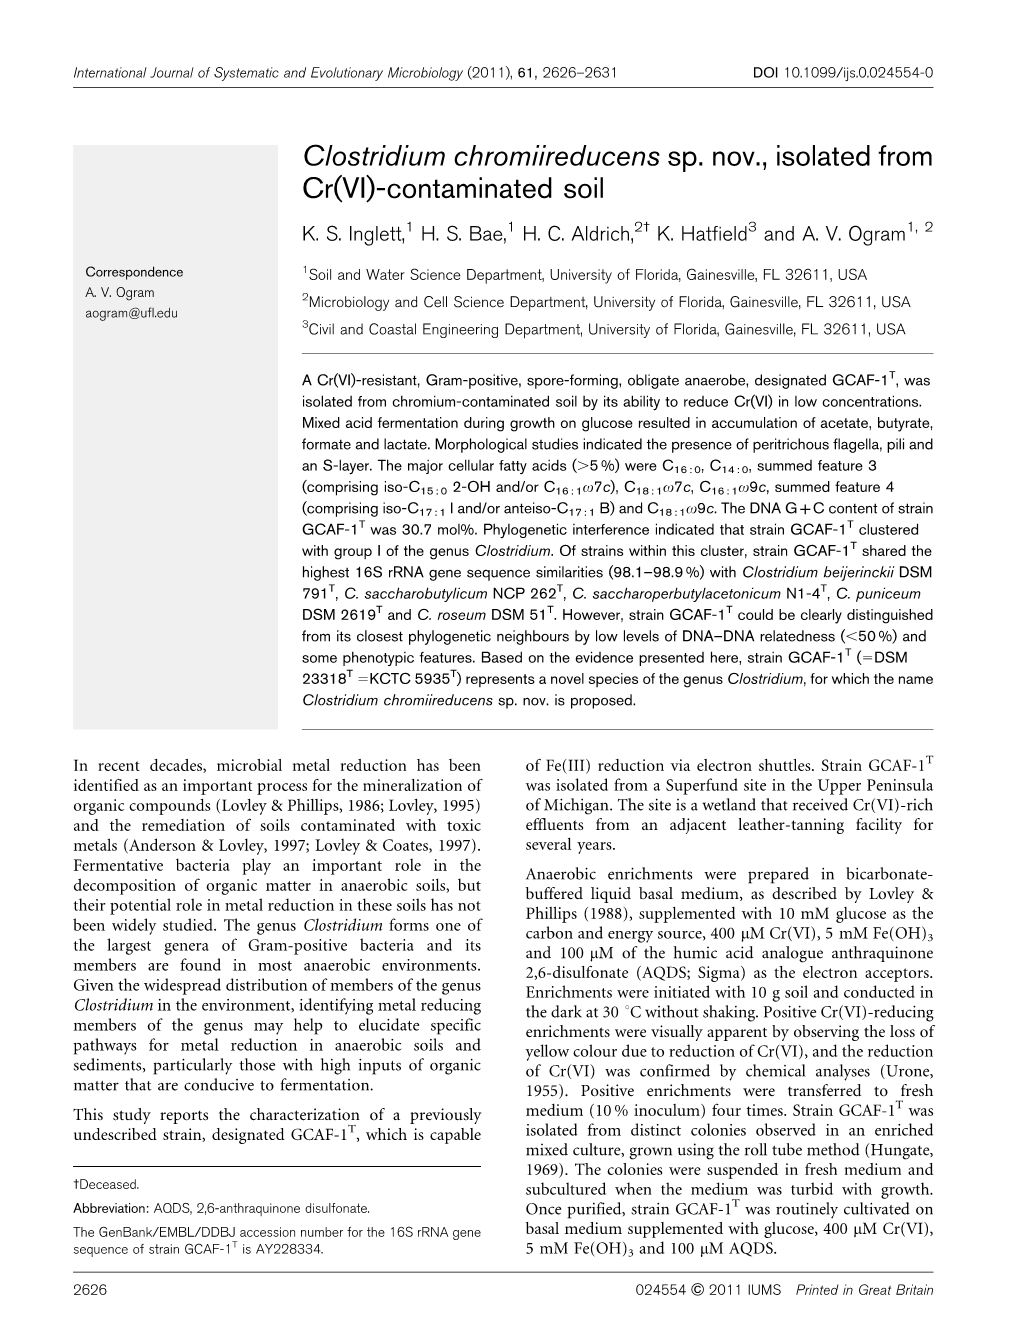 Clostridium Chromiireducens Sp. Nov., Isolated from Cr(VI)-Contaminated Soil